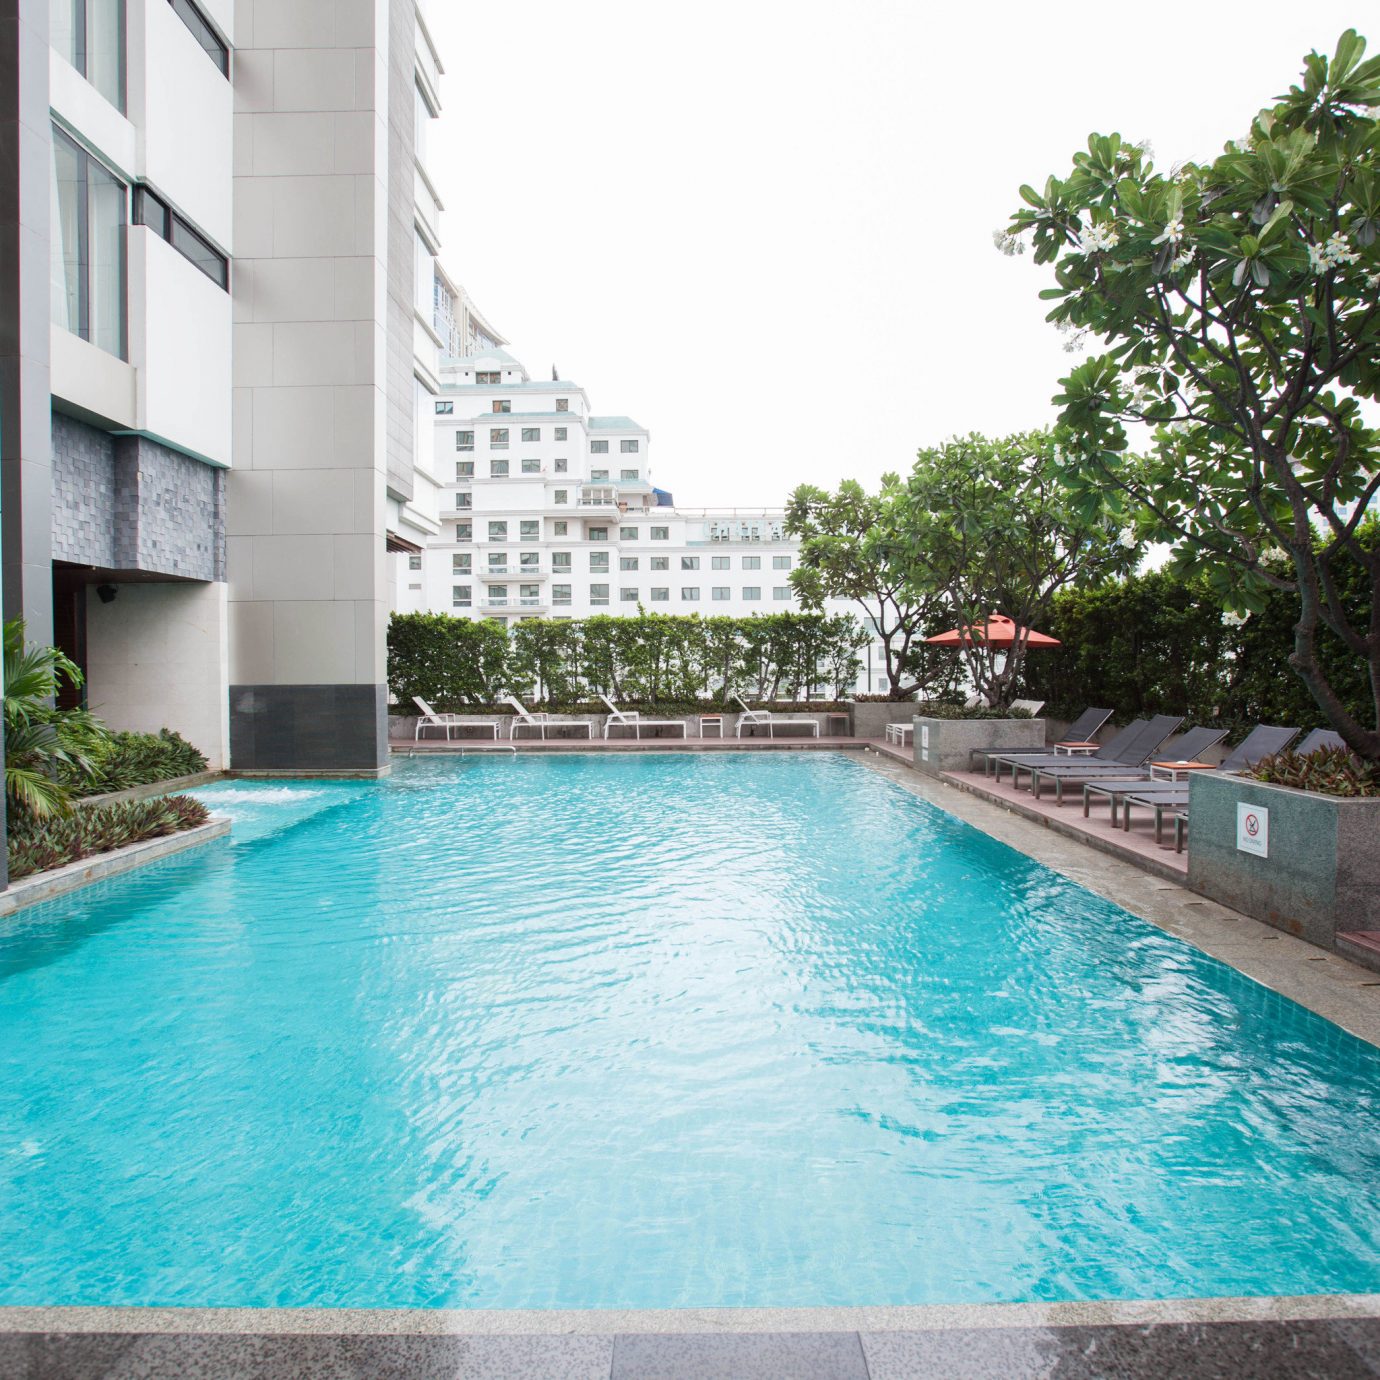 Pool water swimming swimming pool property Resort leisure condominium reflecting pool blue Villa backyard empty